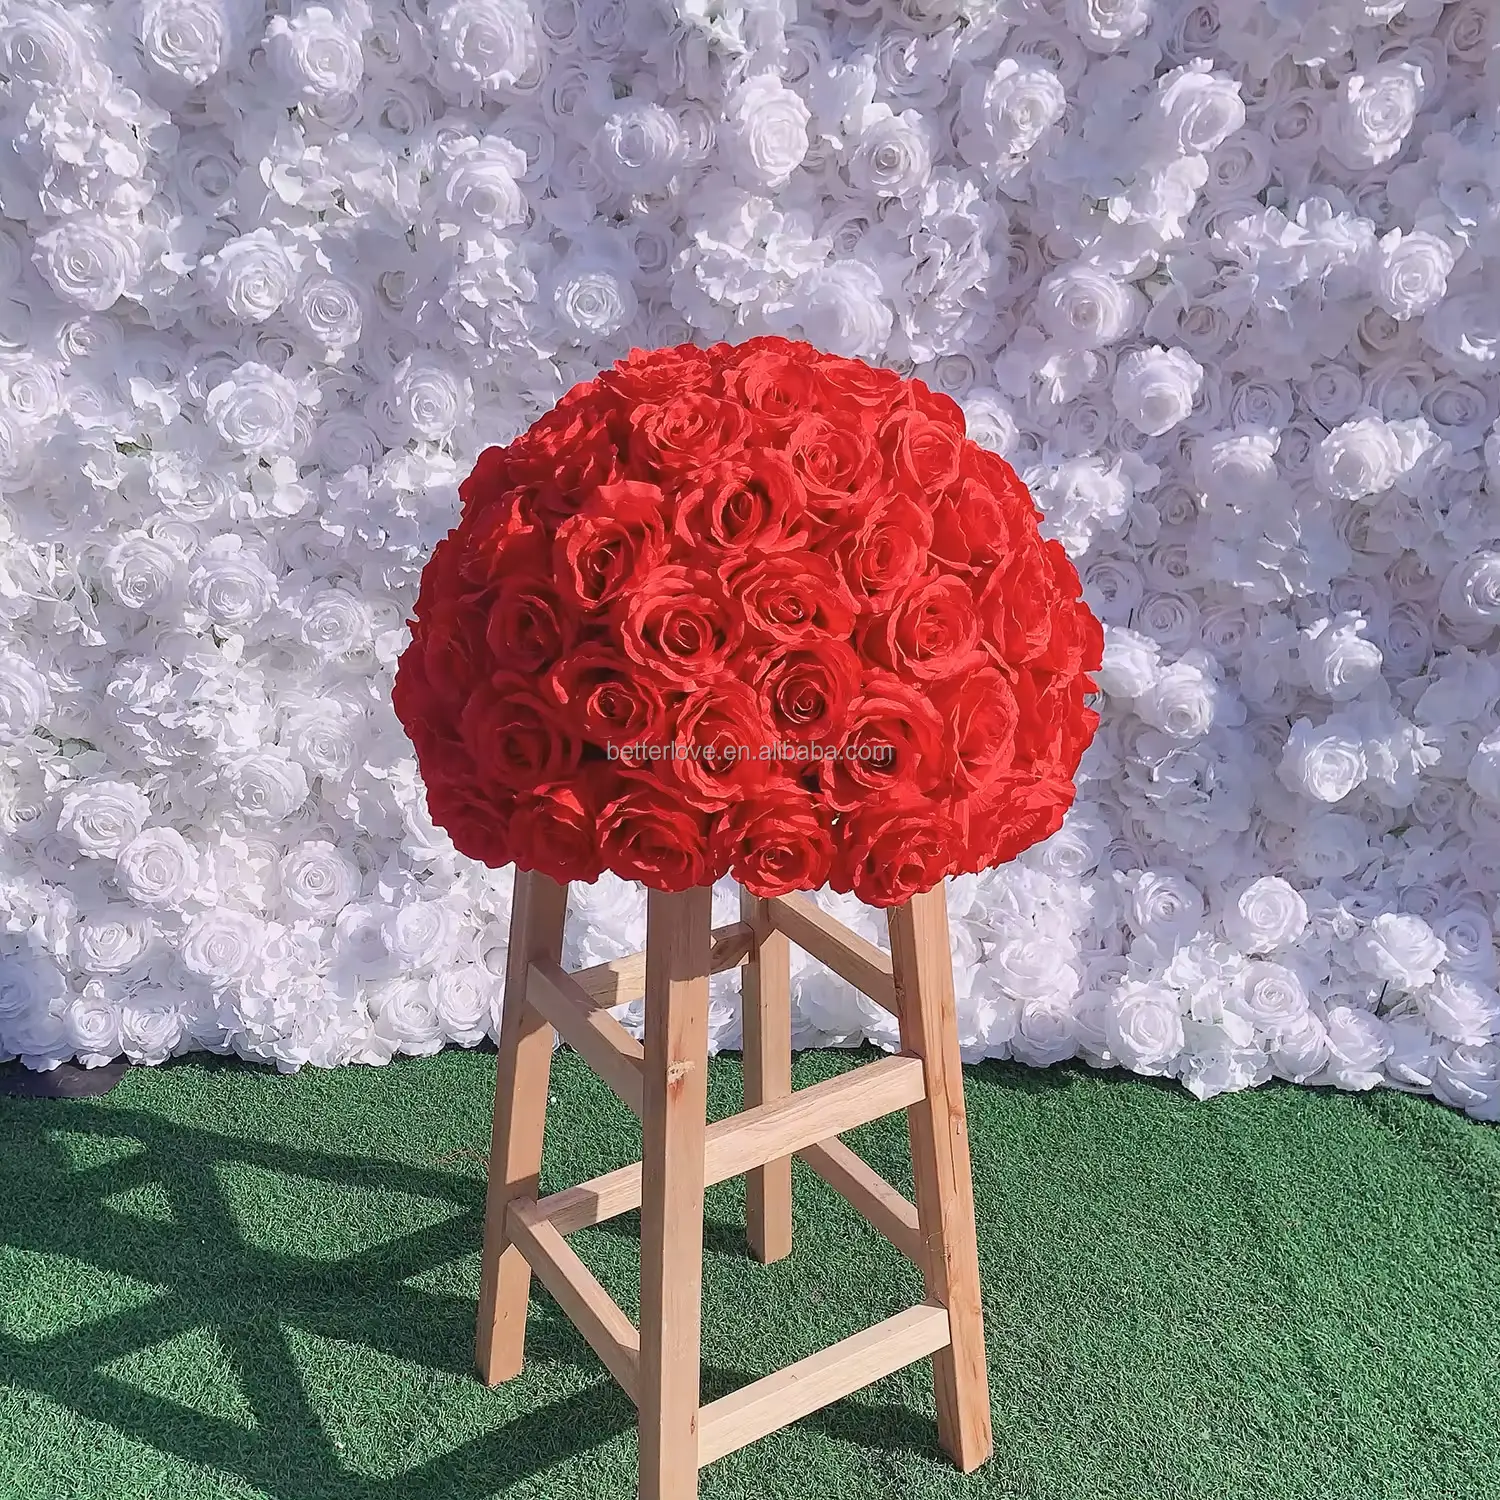 betterlove red flower balls wedding centerpieces chrysanthemum bouquet for wedding decoration artificial green